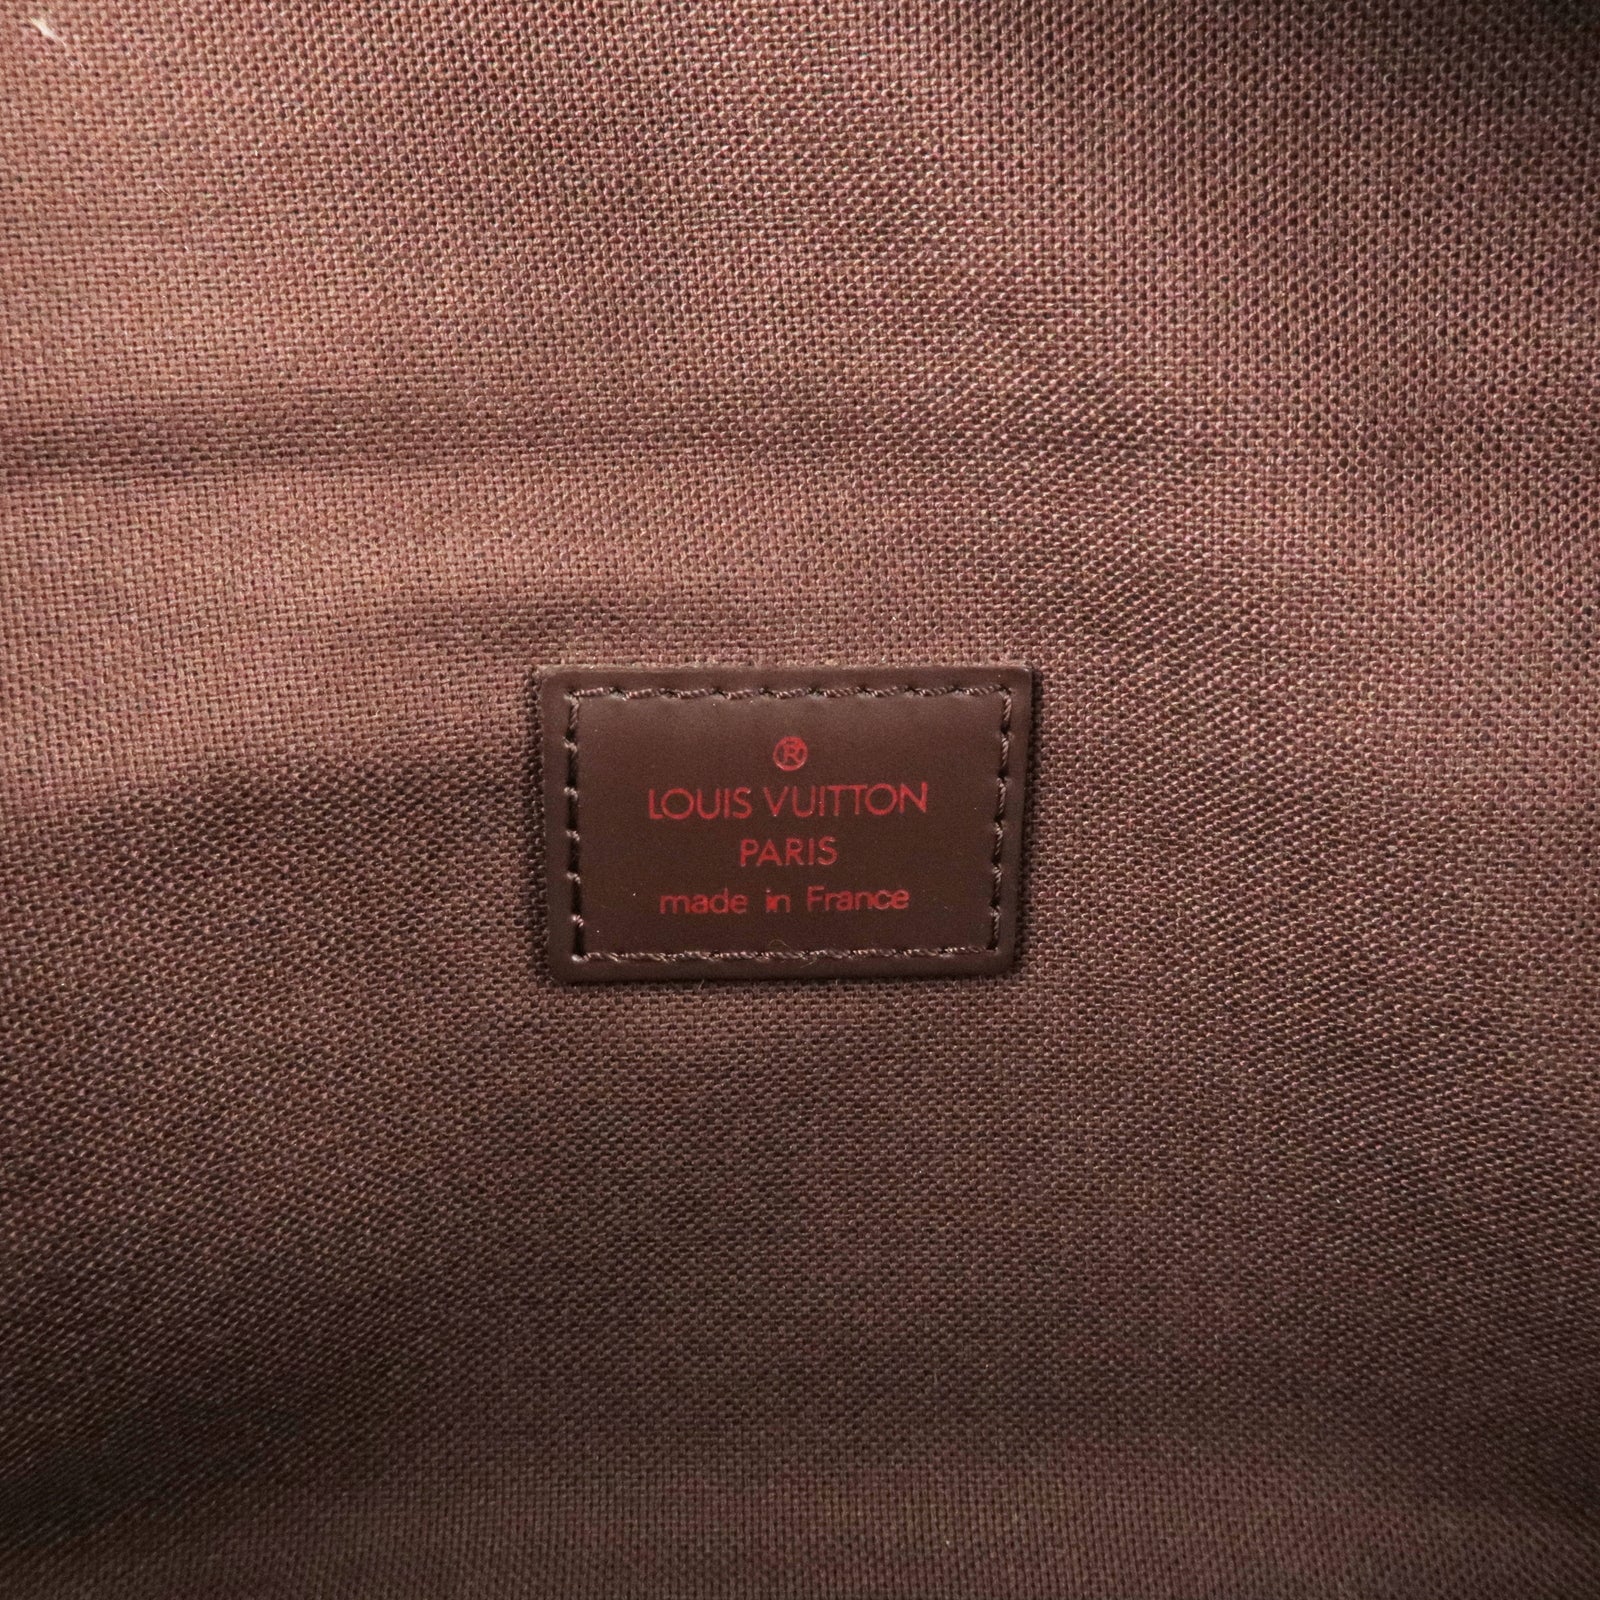 Star-Bag of The Week: Louis Vuitton Monogram Limelight Clutch